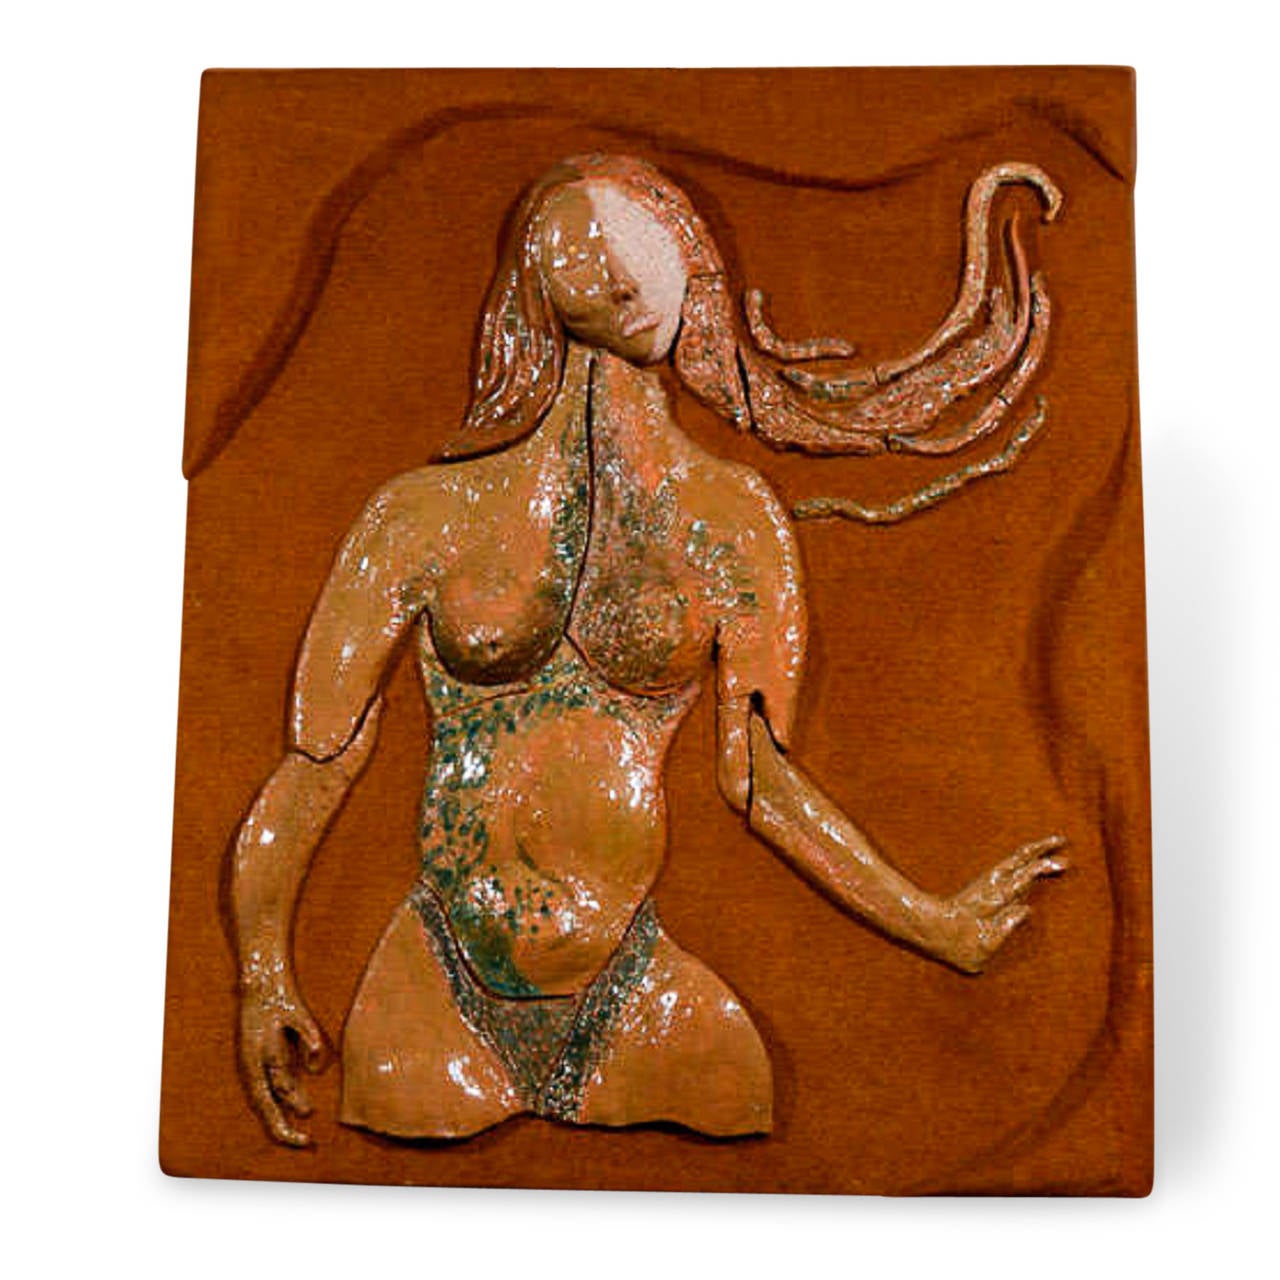 Flat female nude ceramic sculpture by Deborah Kreider; back is signed "Deborah J. Kreider. Mattapoisett, Mass 1970". Measures: Height 45 in, width 38 1/2 in, depth 1 in. (sats)

 